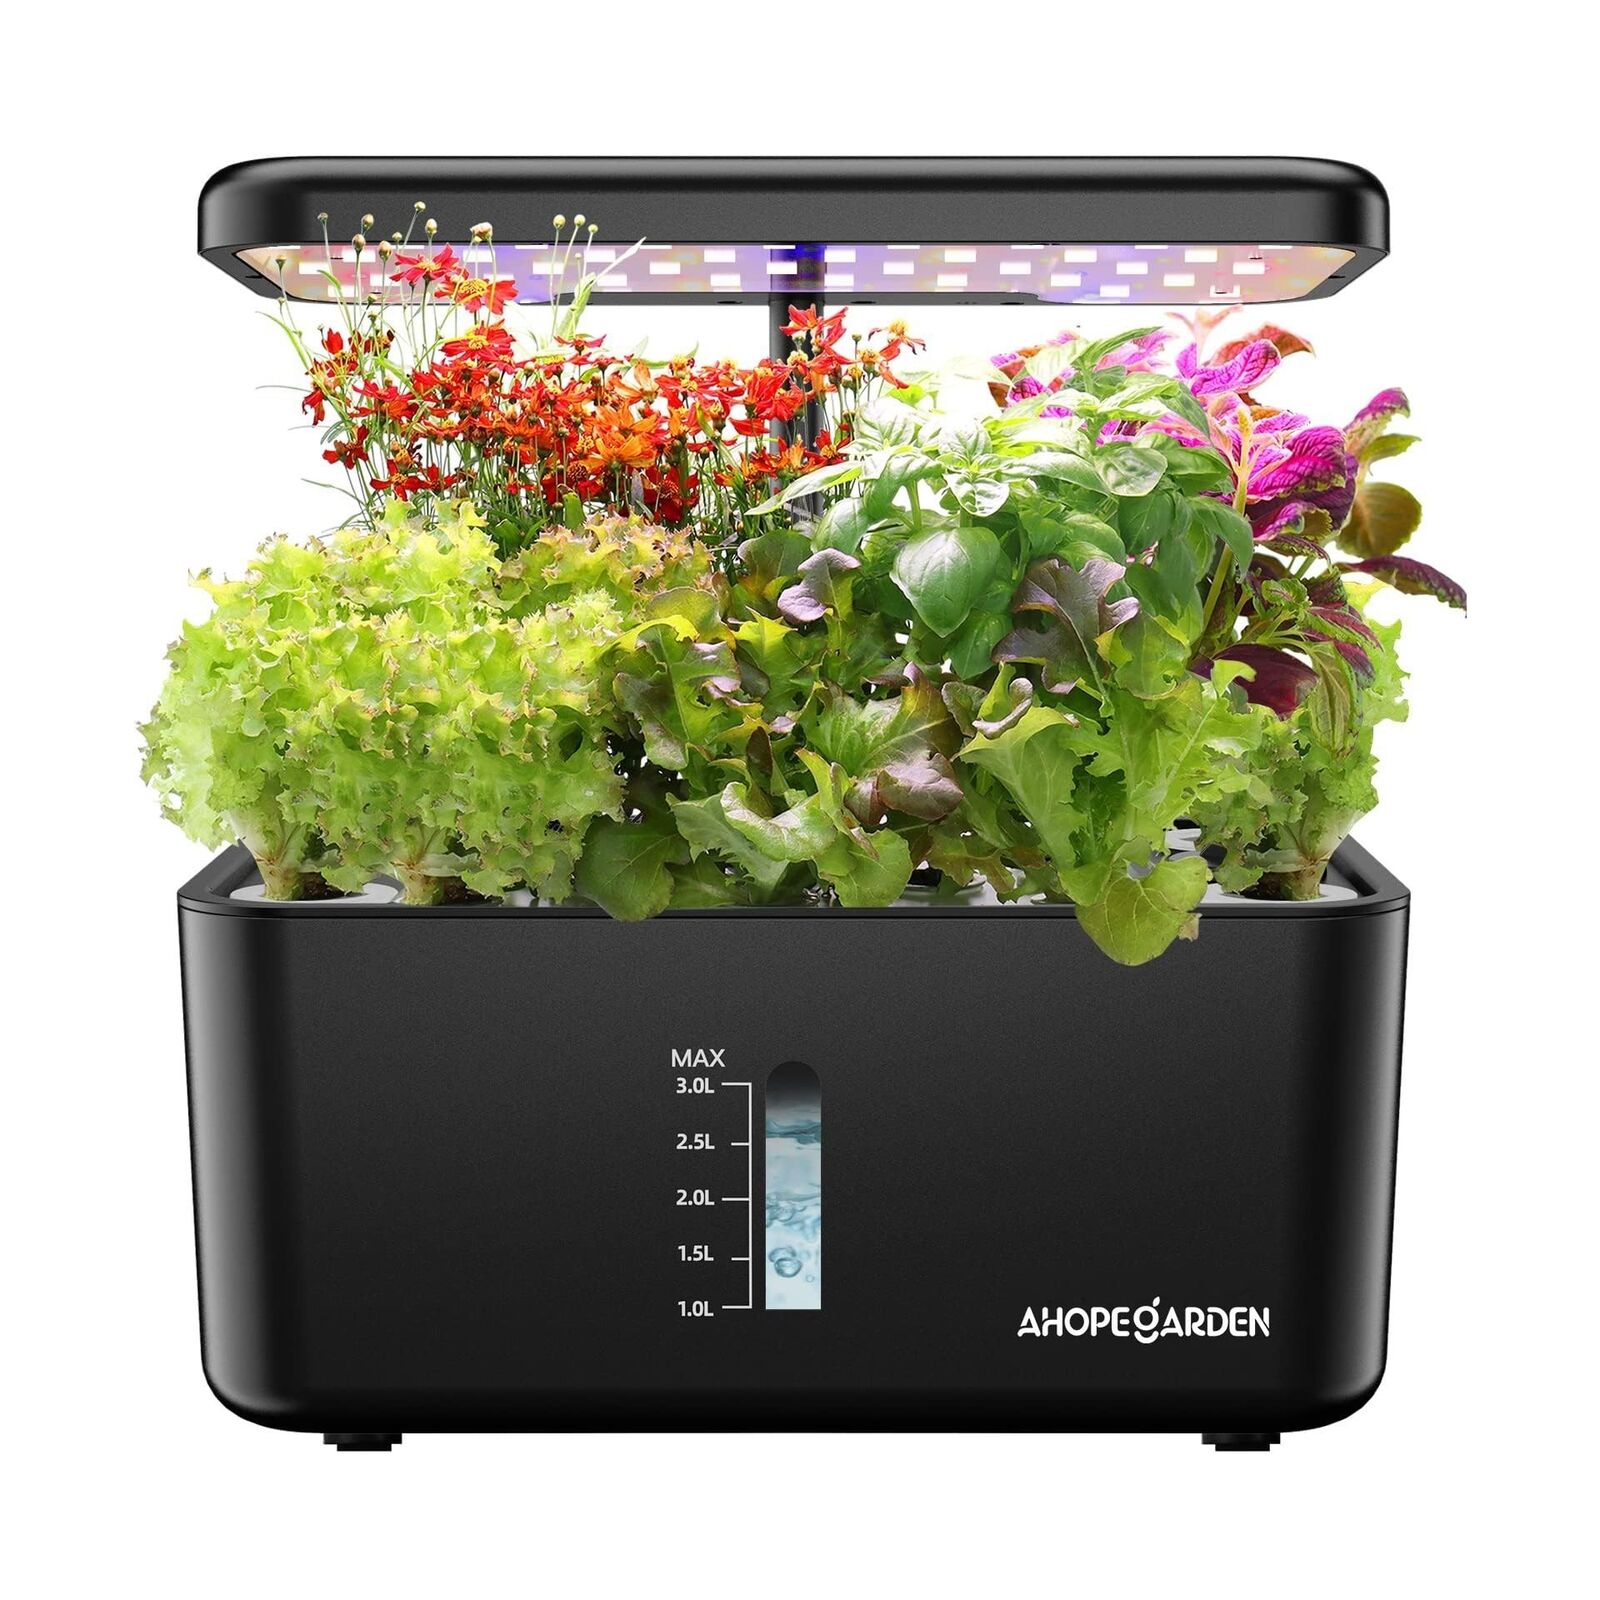 Ahopegarden Indoor Garden Hydroponic Growing System Plant Germination Kit Aer...